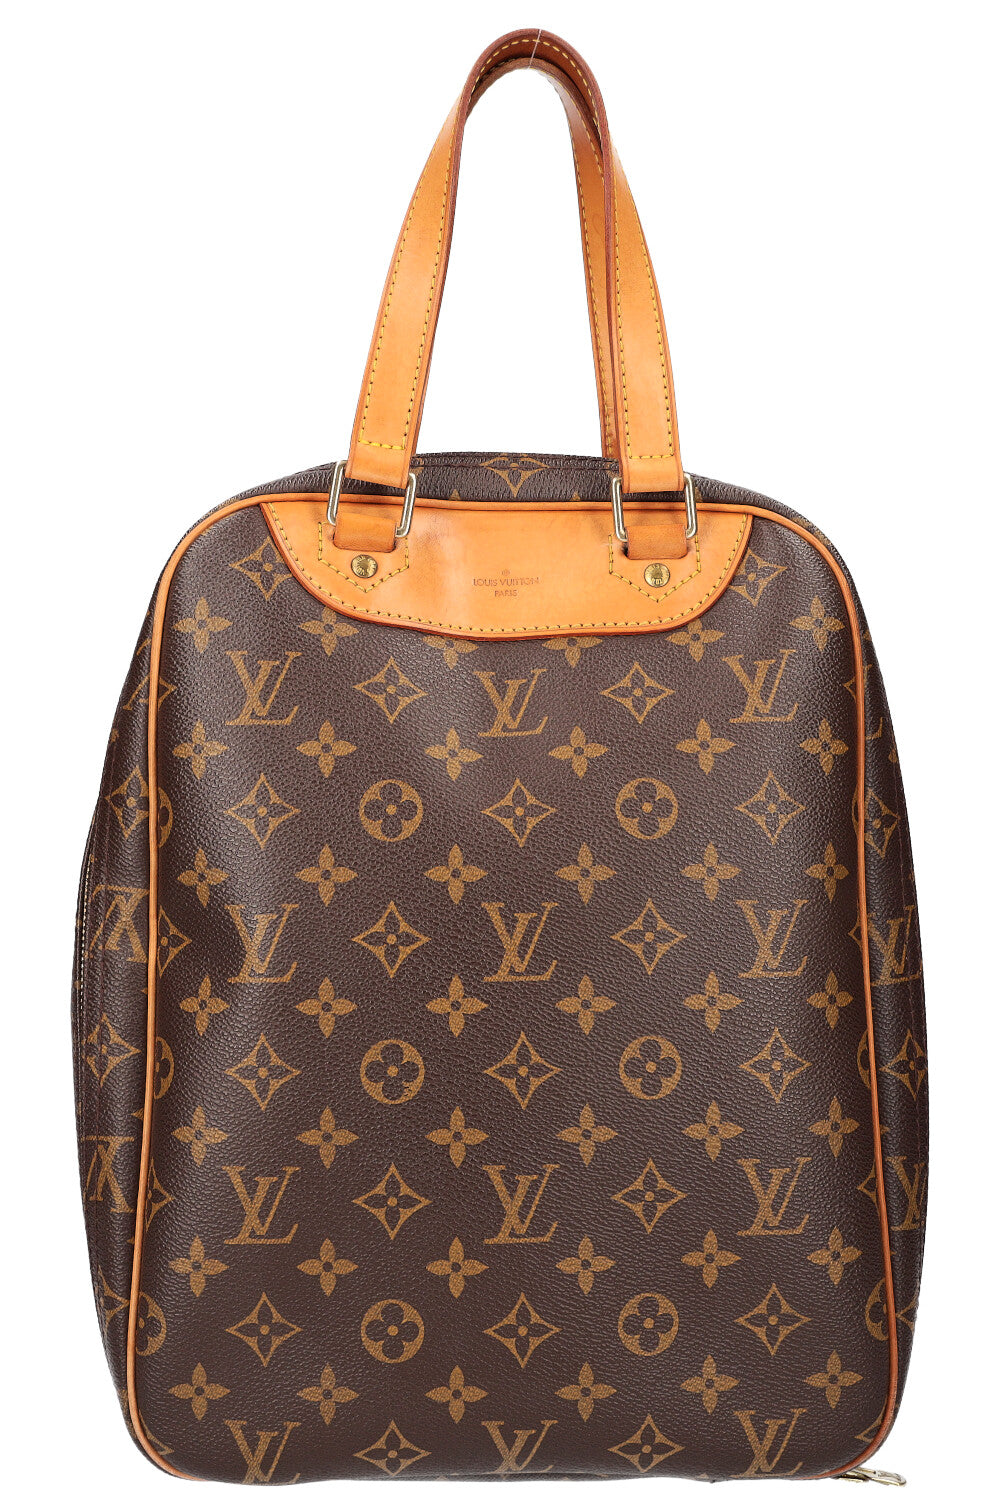 Black bag-Louis Vuitton  Bolsas, Bolsas de grife, Acessórios